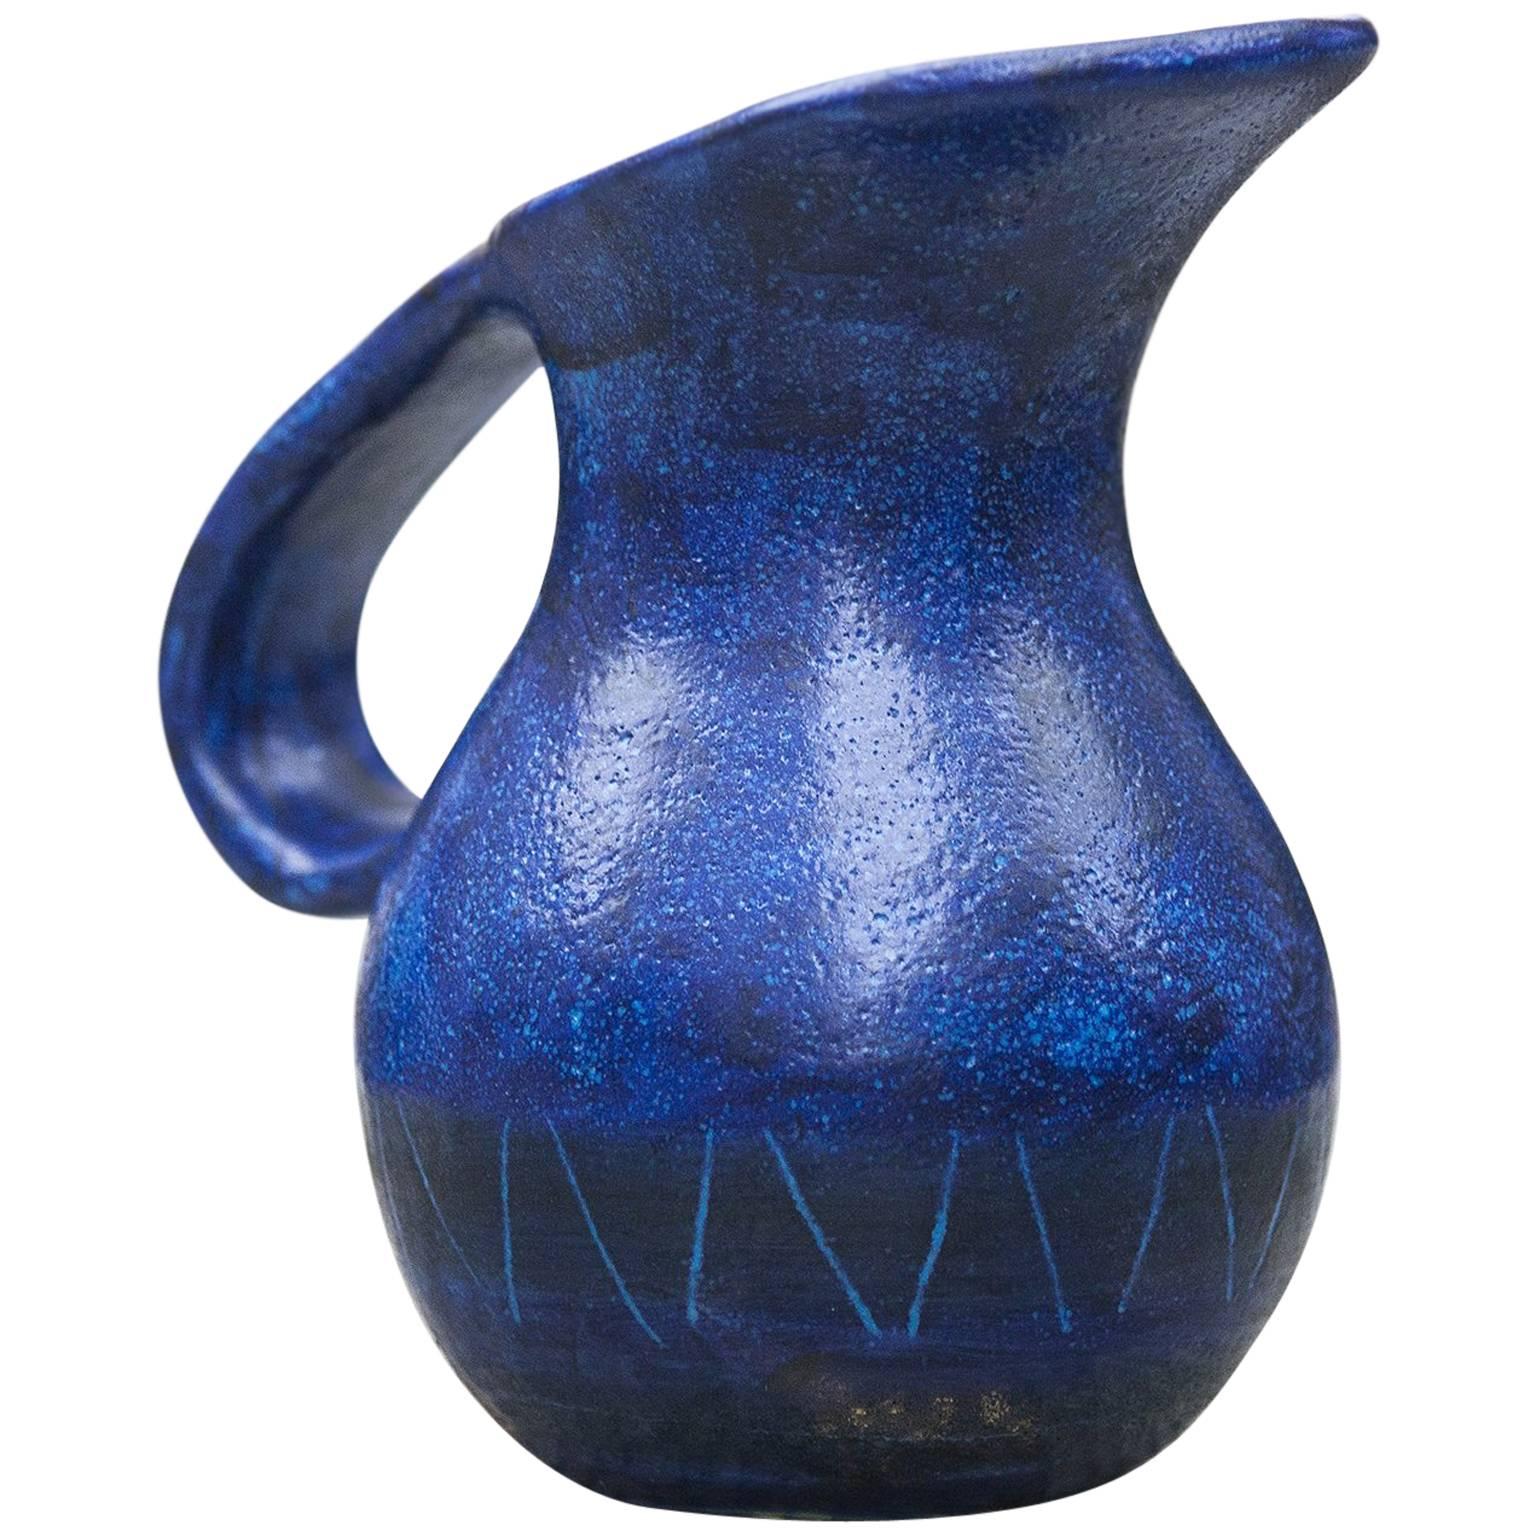 Bruno Gambone Keramikkrug Blau, Italien, 1958